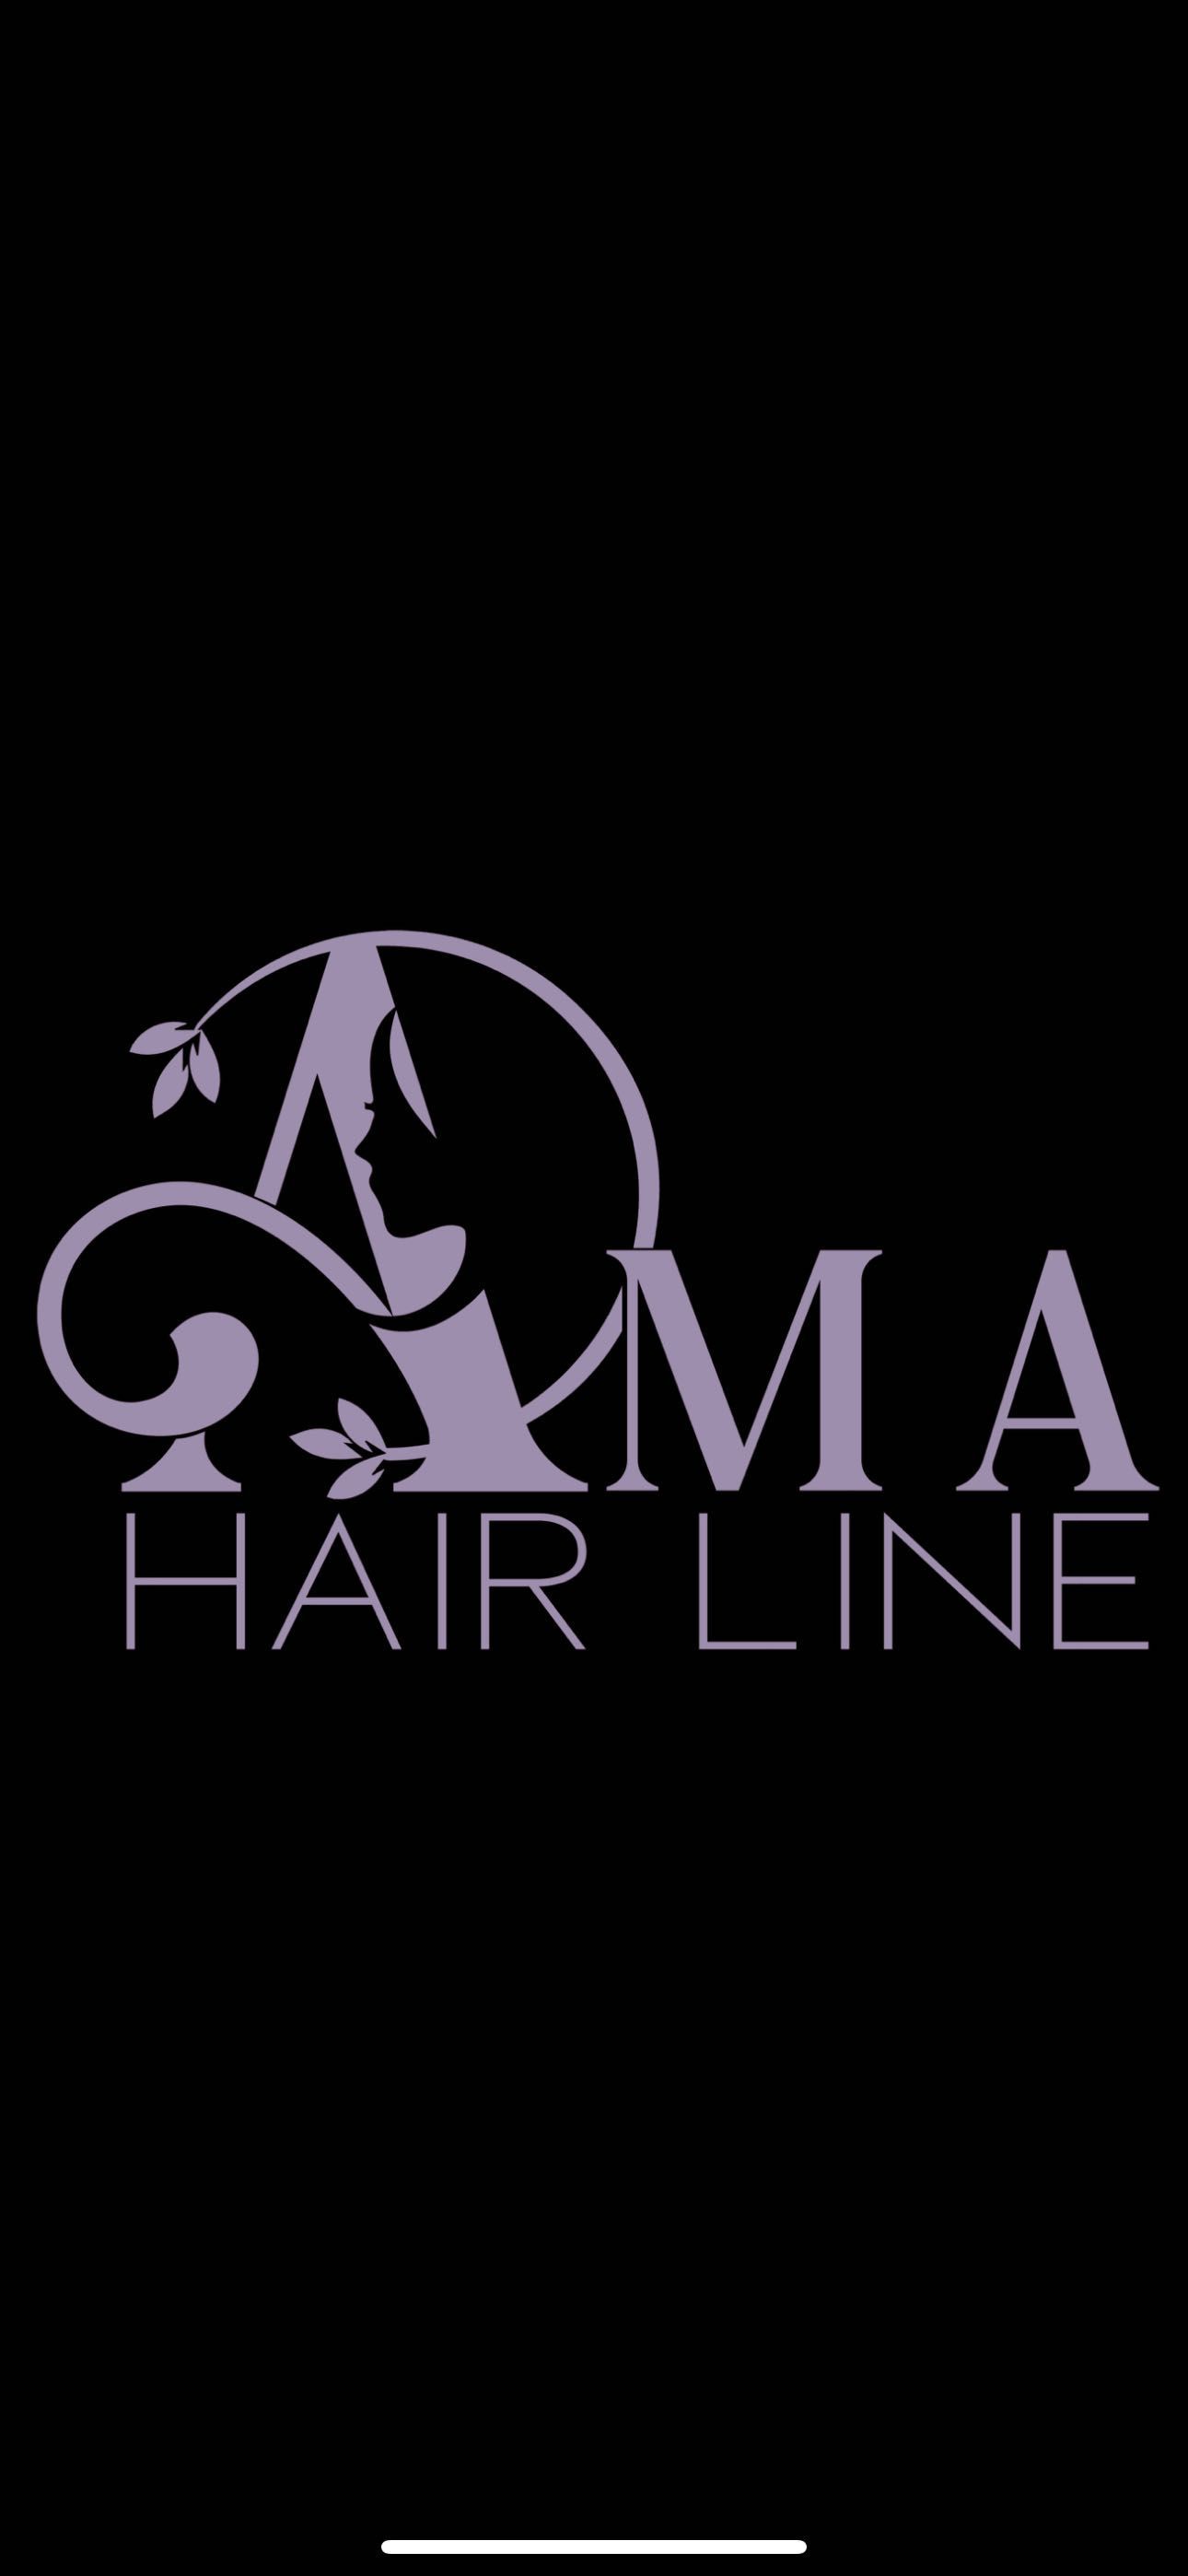 Ama hair line, 1621 N John Young Pkwy, #14, Kissimmee, 34741